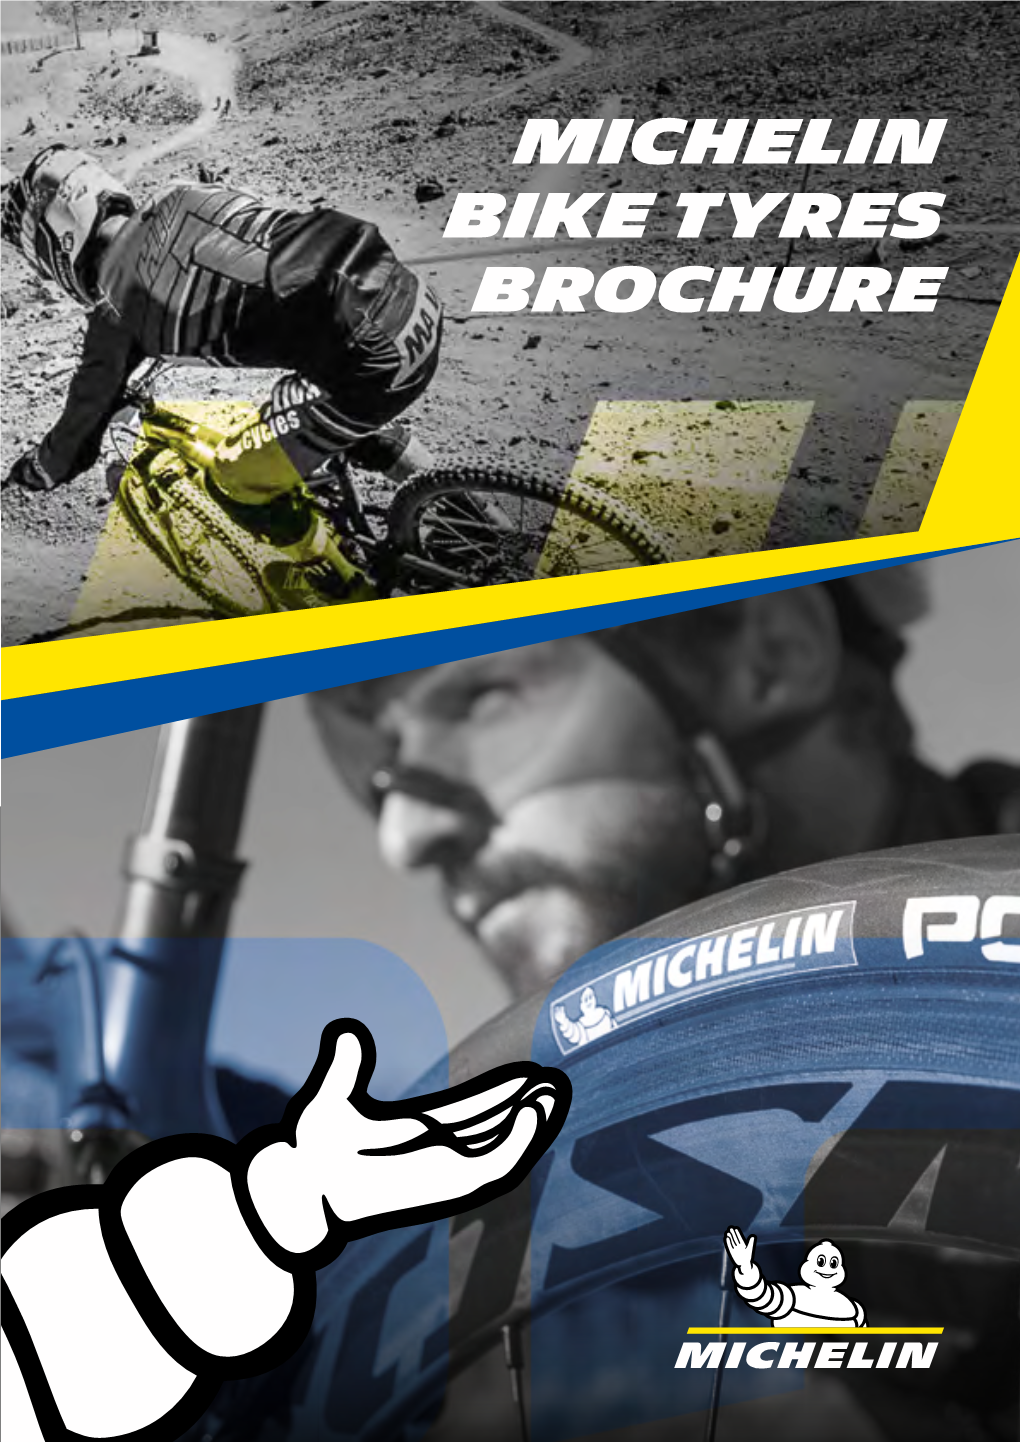 Michelin Bike Tyres Brochure Competitors in 2018 Competitors in 2018 Choosing the Michelin Brand Means Choosing